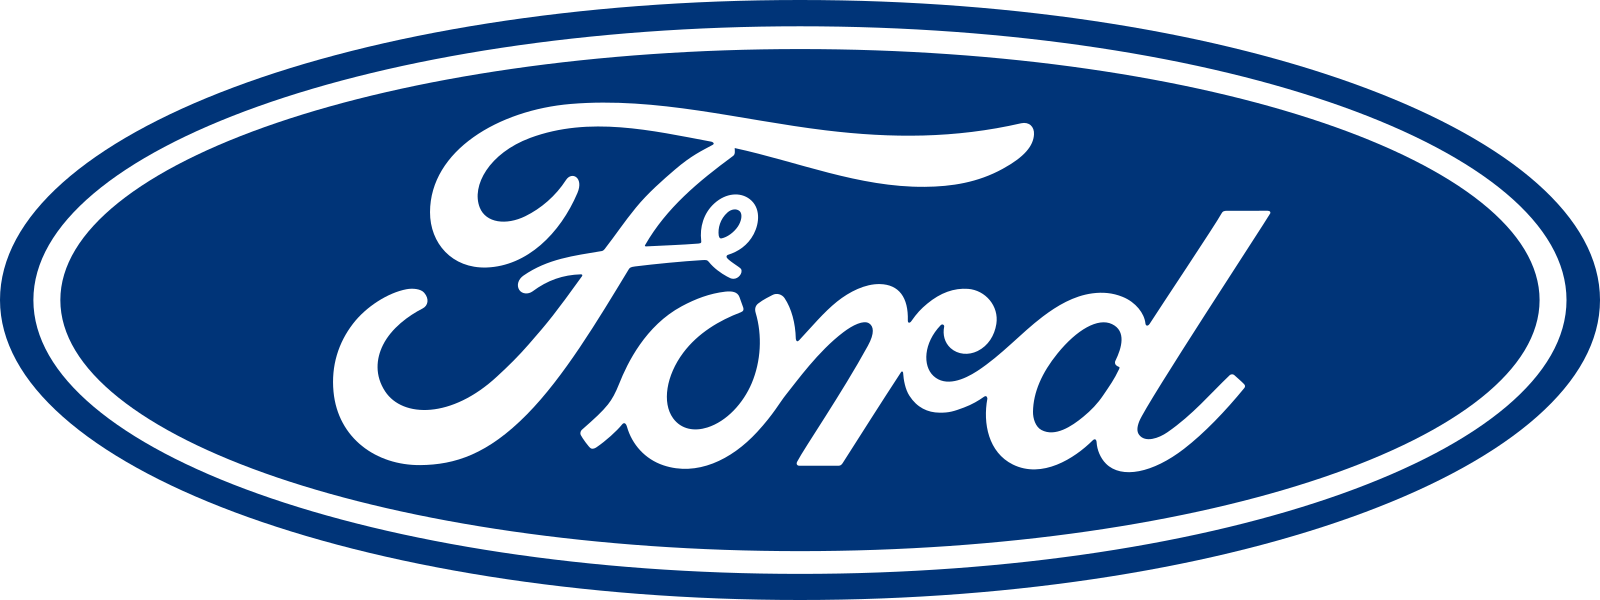 ford logo 3 - Ford Logo